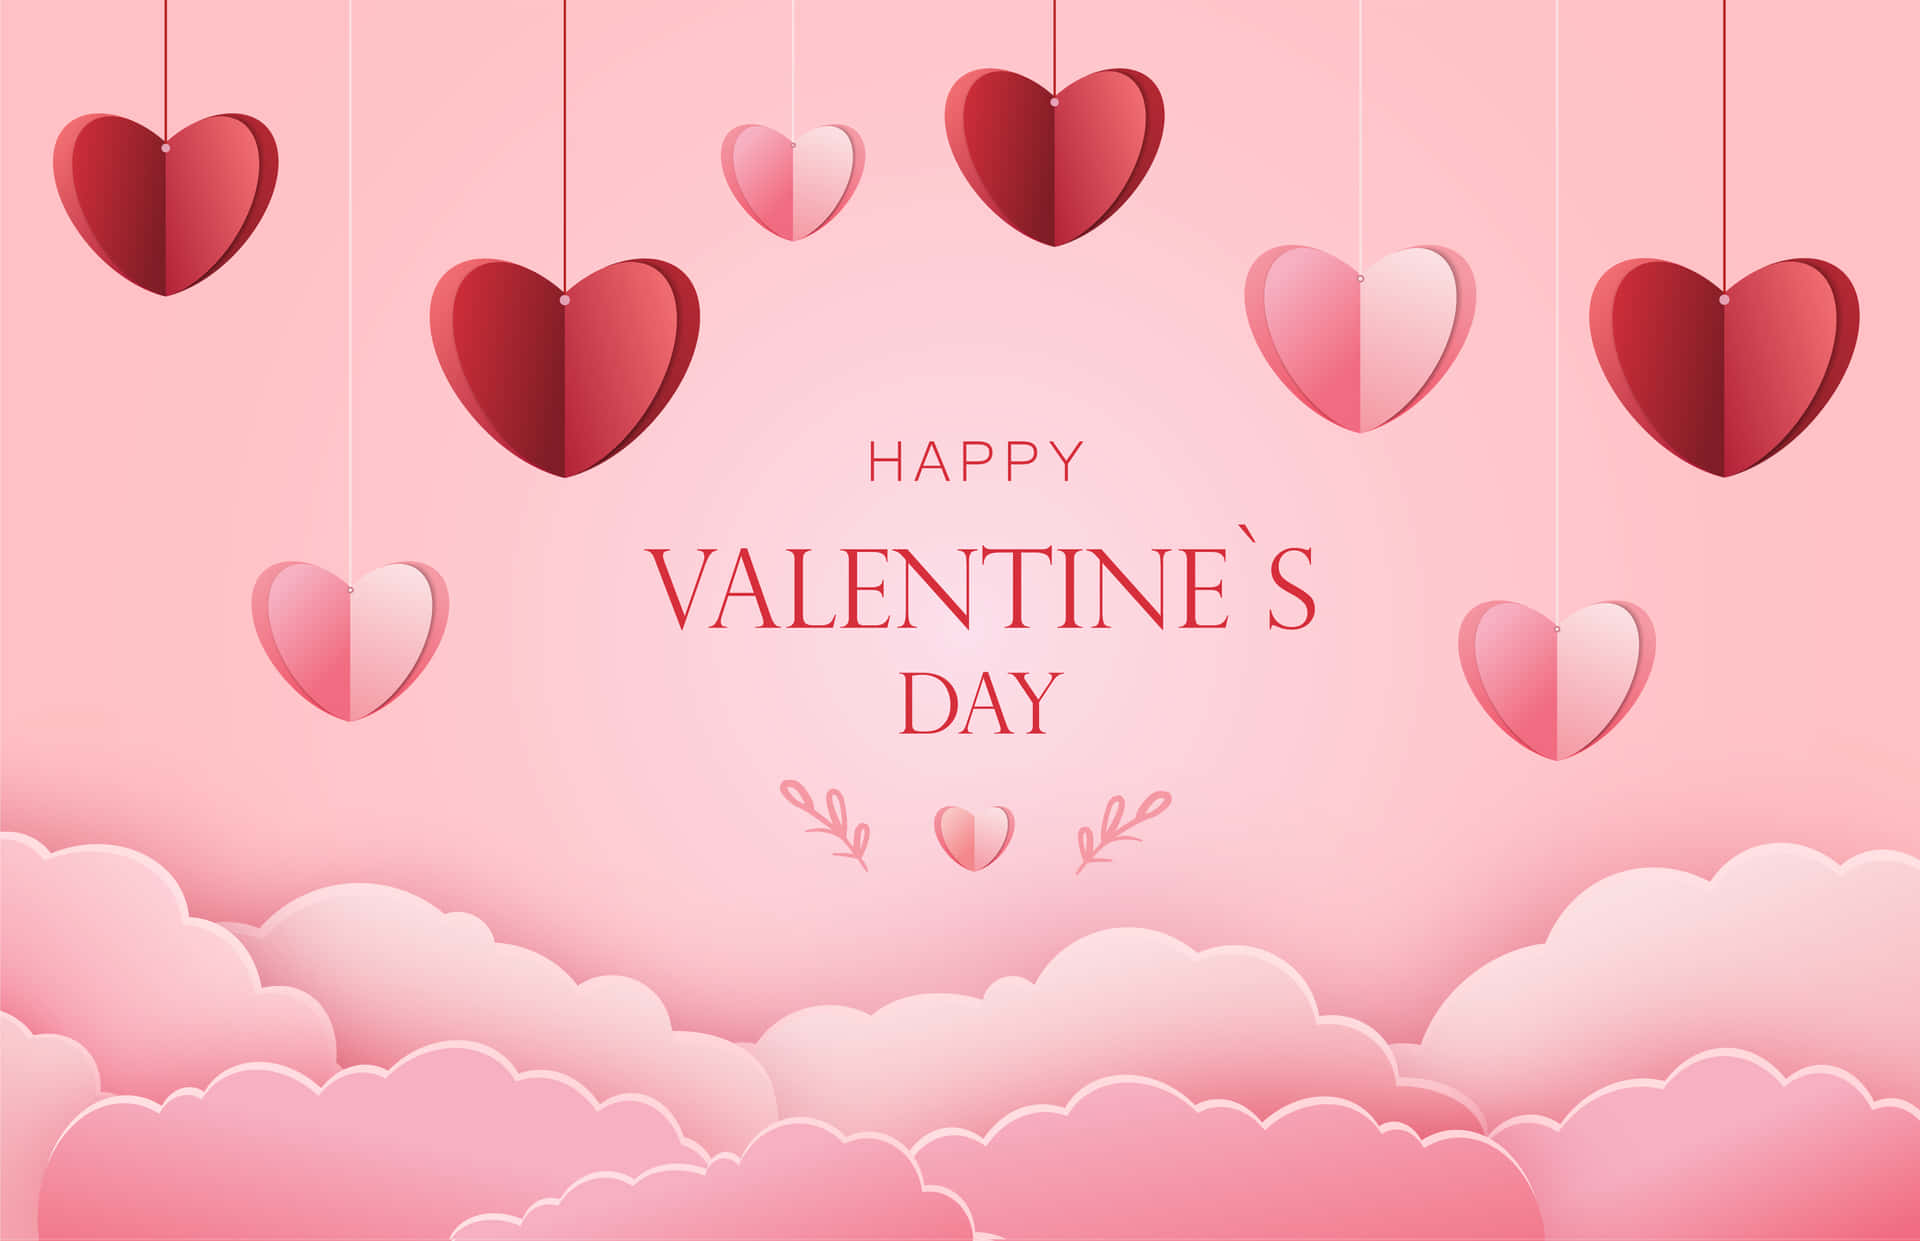 Celebrael Amor Con Este Vibrante Fondo De Feliz Día De San Valentín